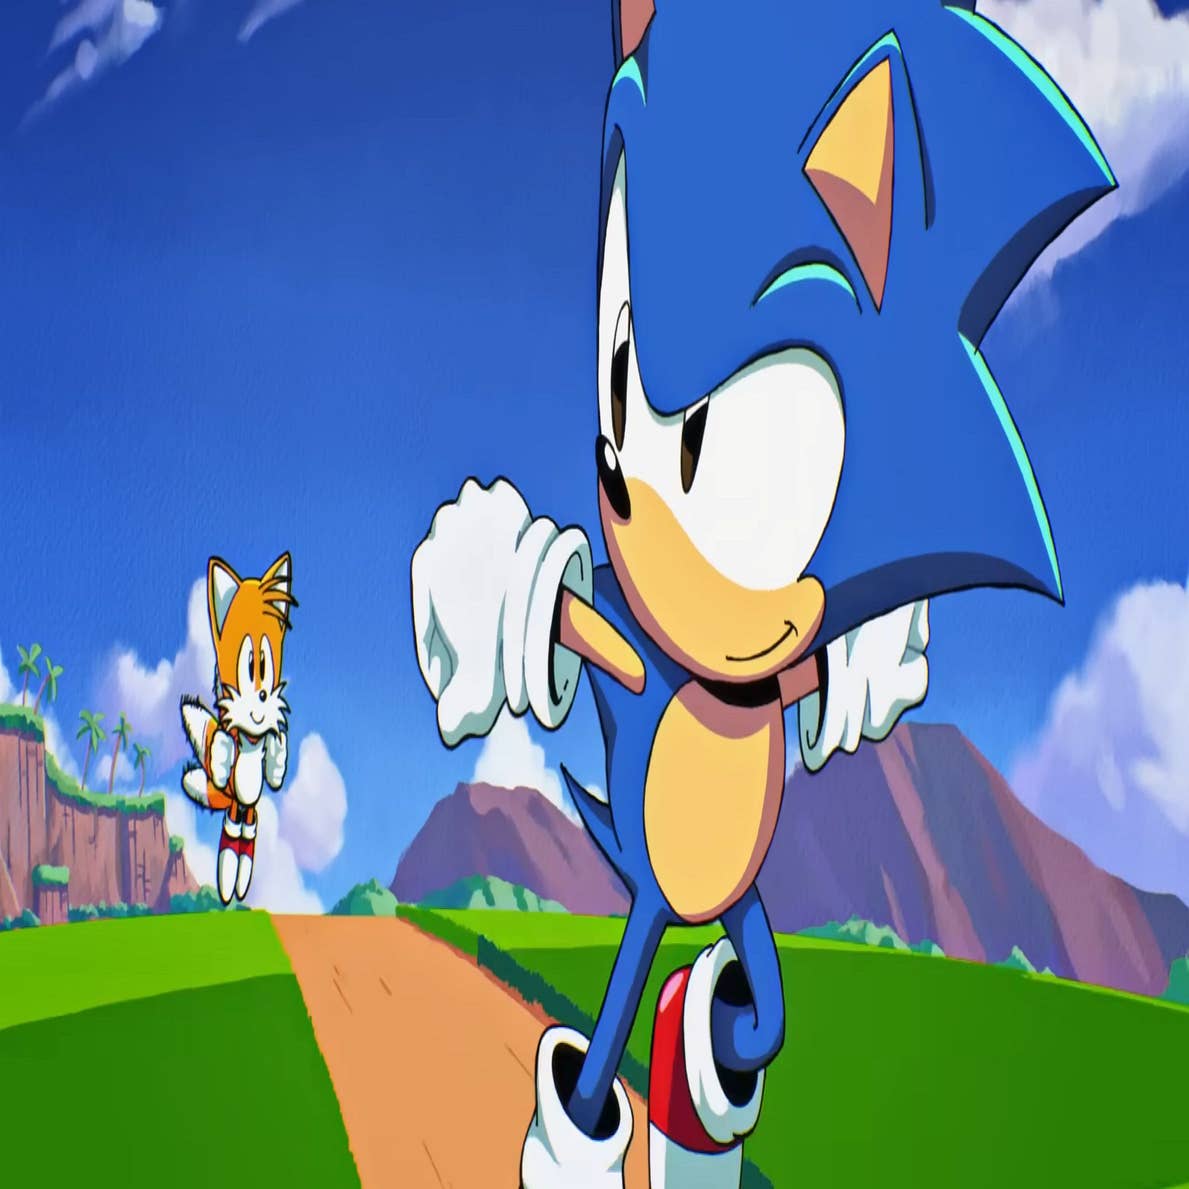 Sonic the Hedgehog 3 - Complete Walkthrough 